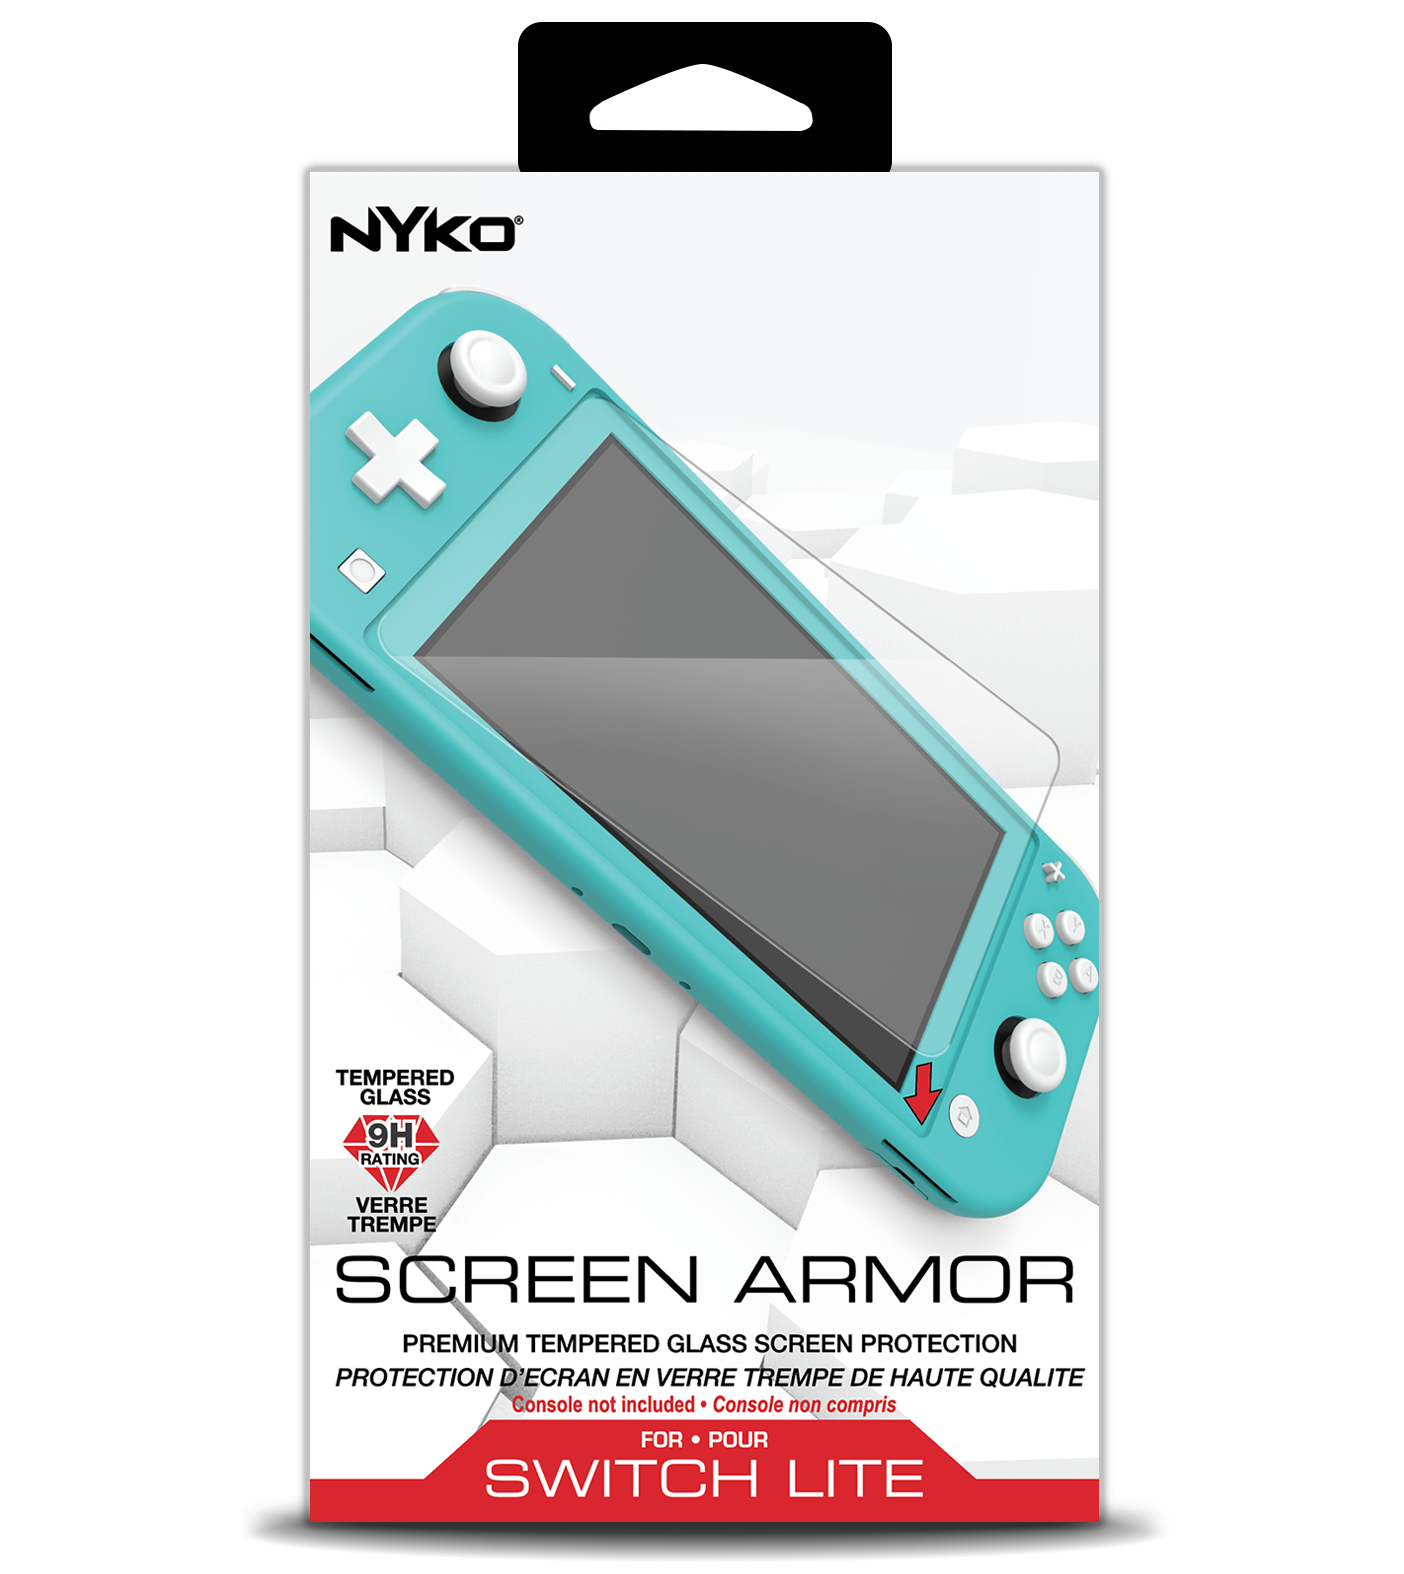 Nyko Switch Lite Screen Armor